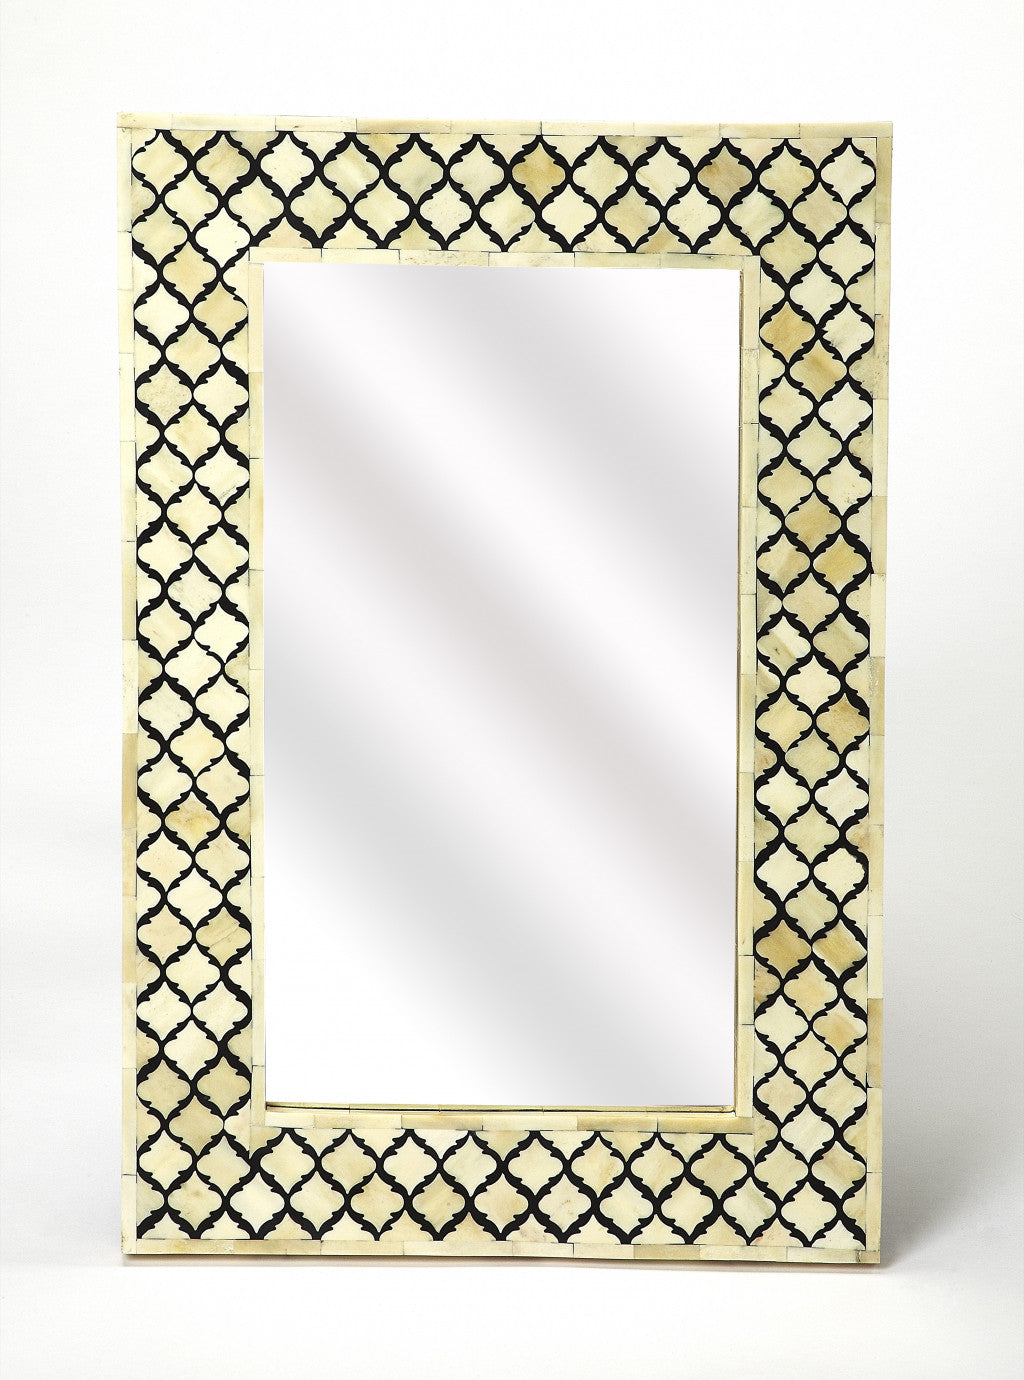 24" Ivory and Black Quatrefoil Bone Inlay Framed Wall Mirror